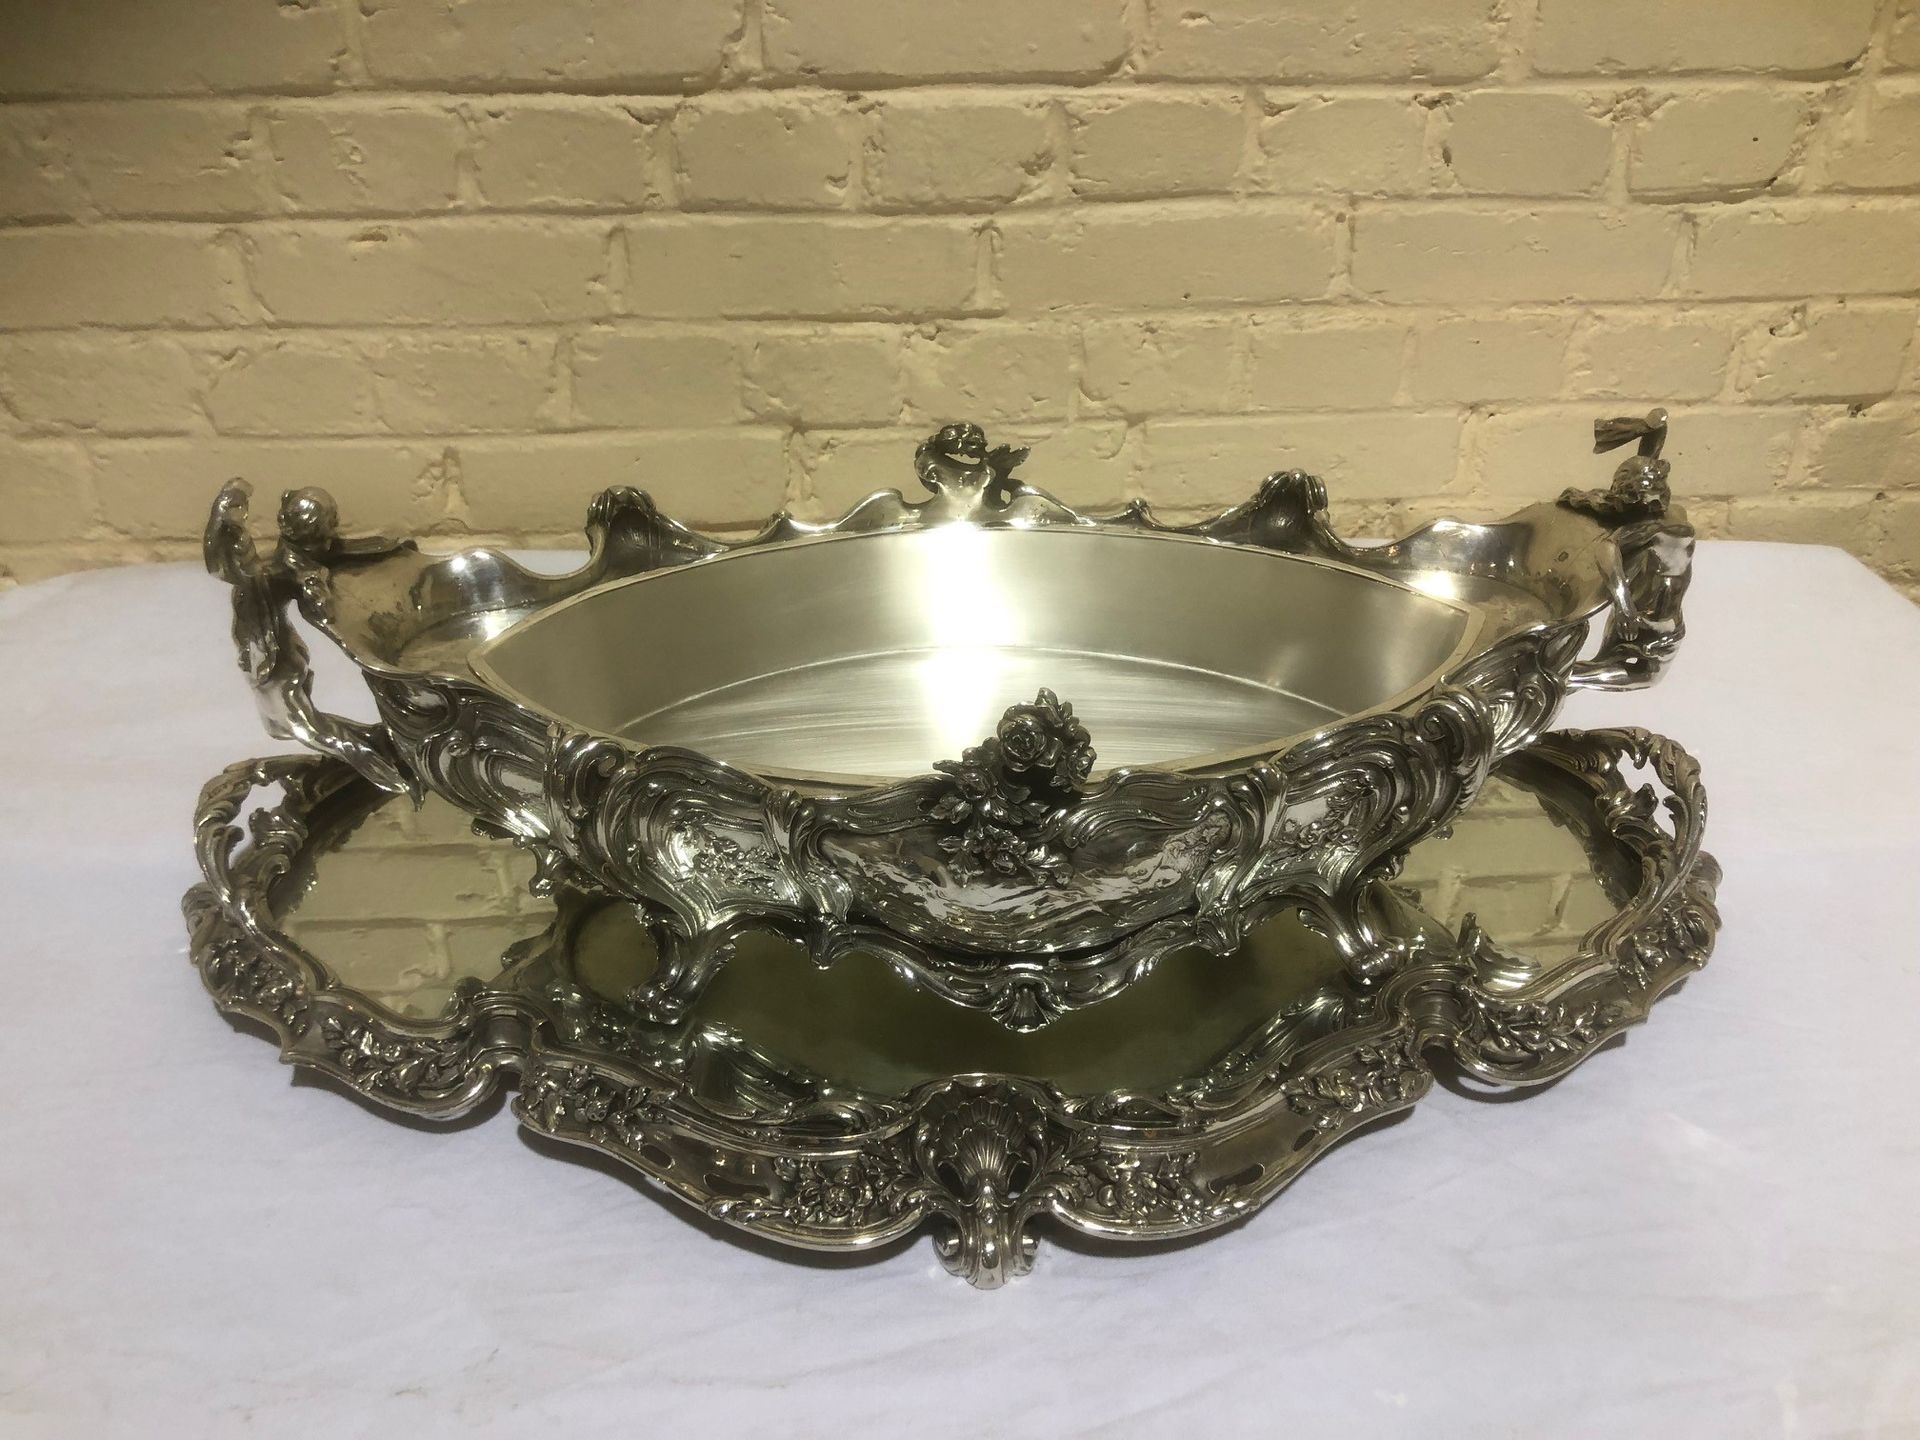 Null 路易十五的重要银色铜质餐桌中央装饰品
由一个中间的镜子组成的托盘，用来放置一个四脚花盆，花盆的把手是仿古风格的舞蹈人物造型。
用贝壳、花和植物作装饰
&hellip;